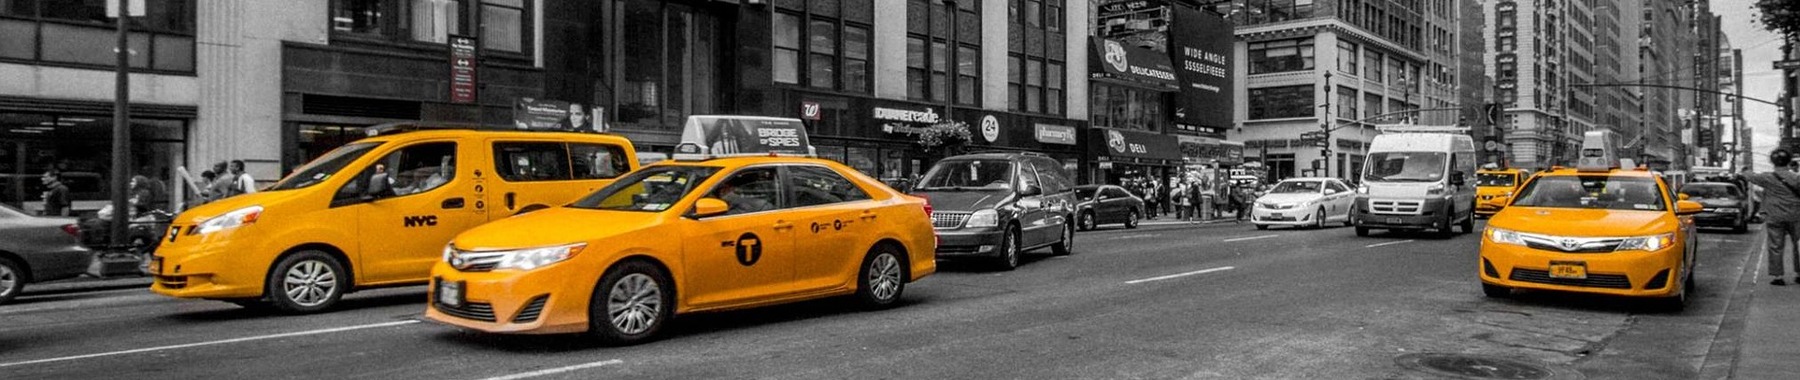 NYC Yellow Cab Data Processing and Analytics